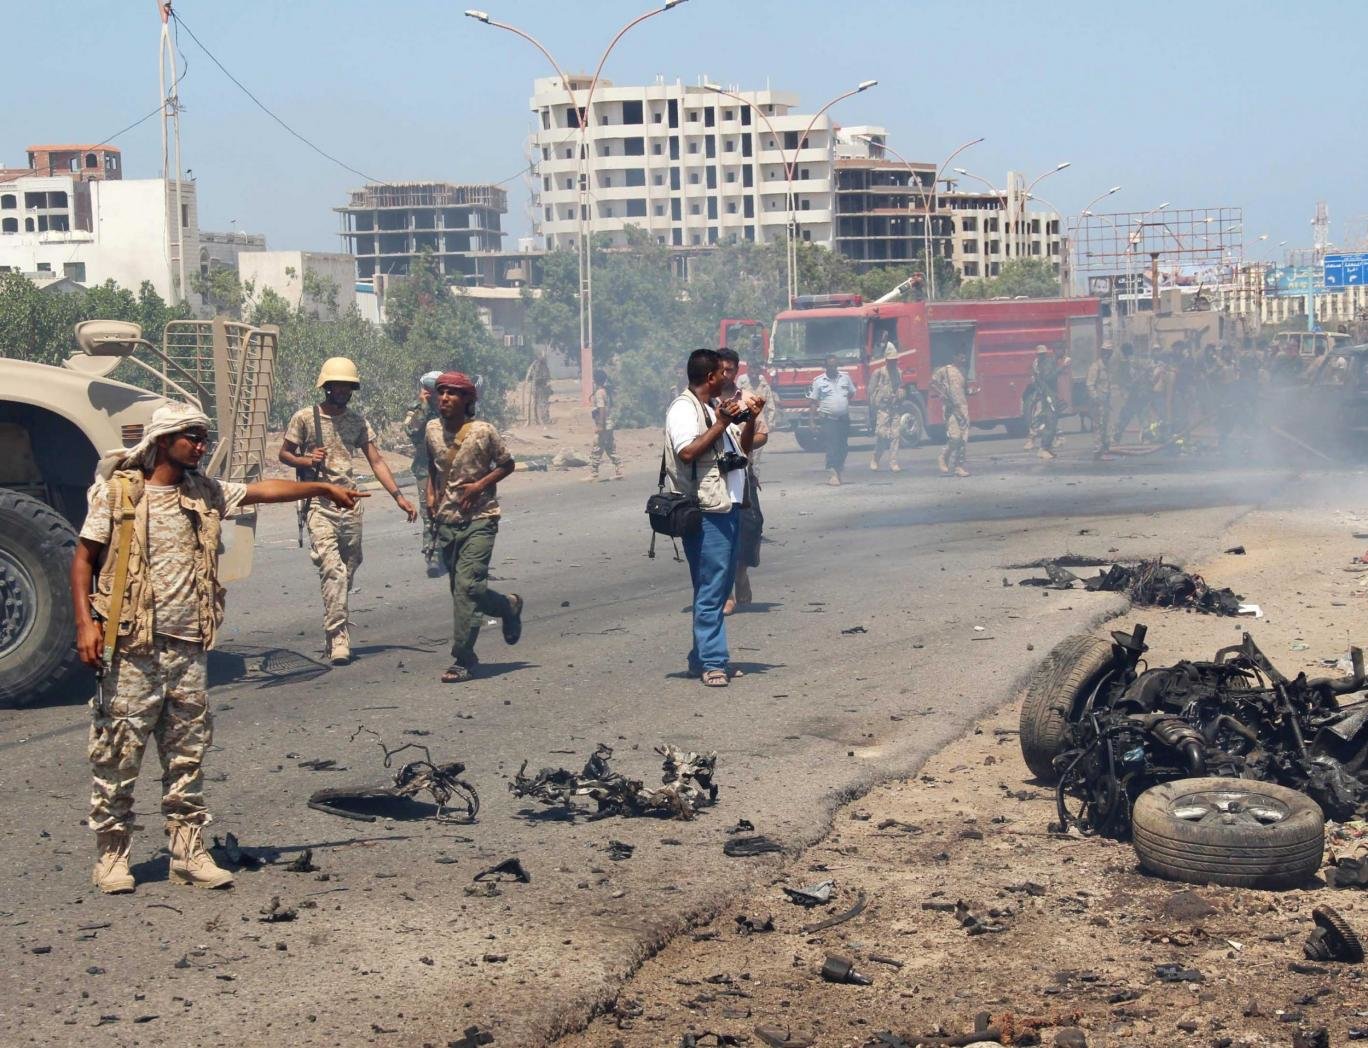 yemen car bomb